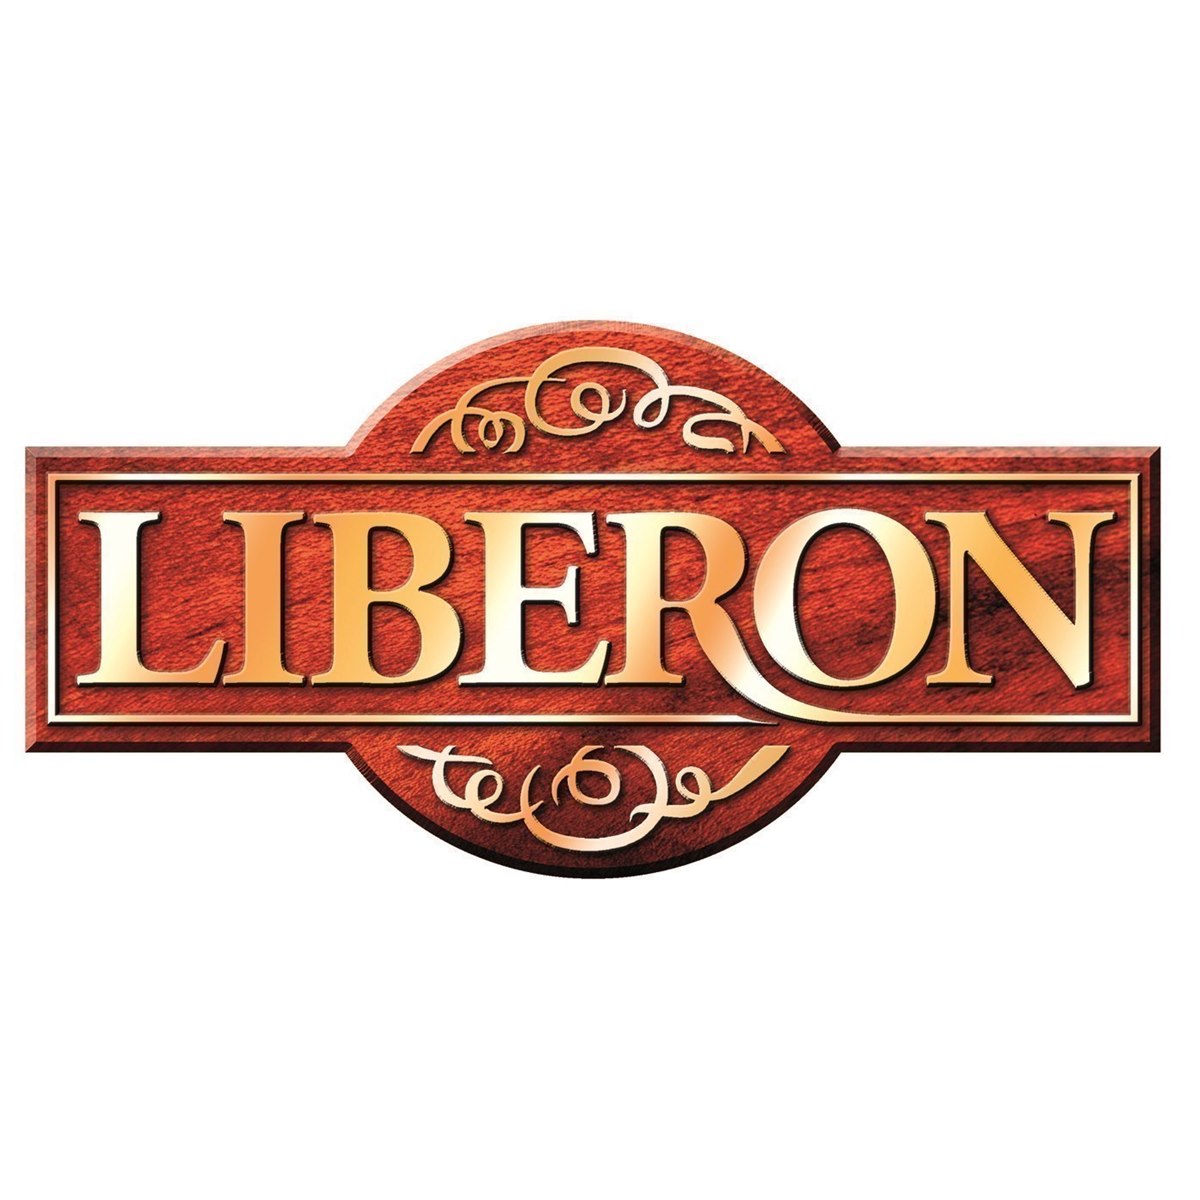 Liberon Furniture Repair Products